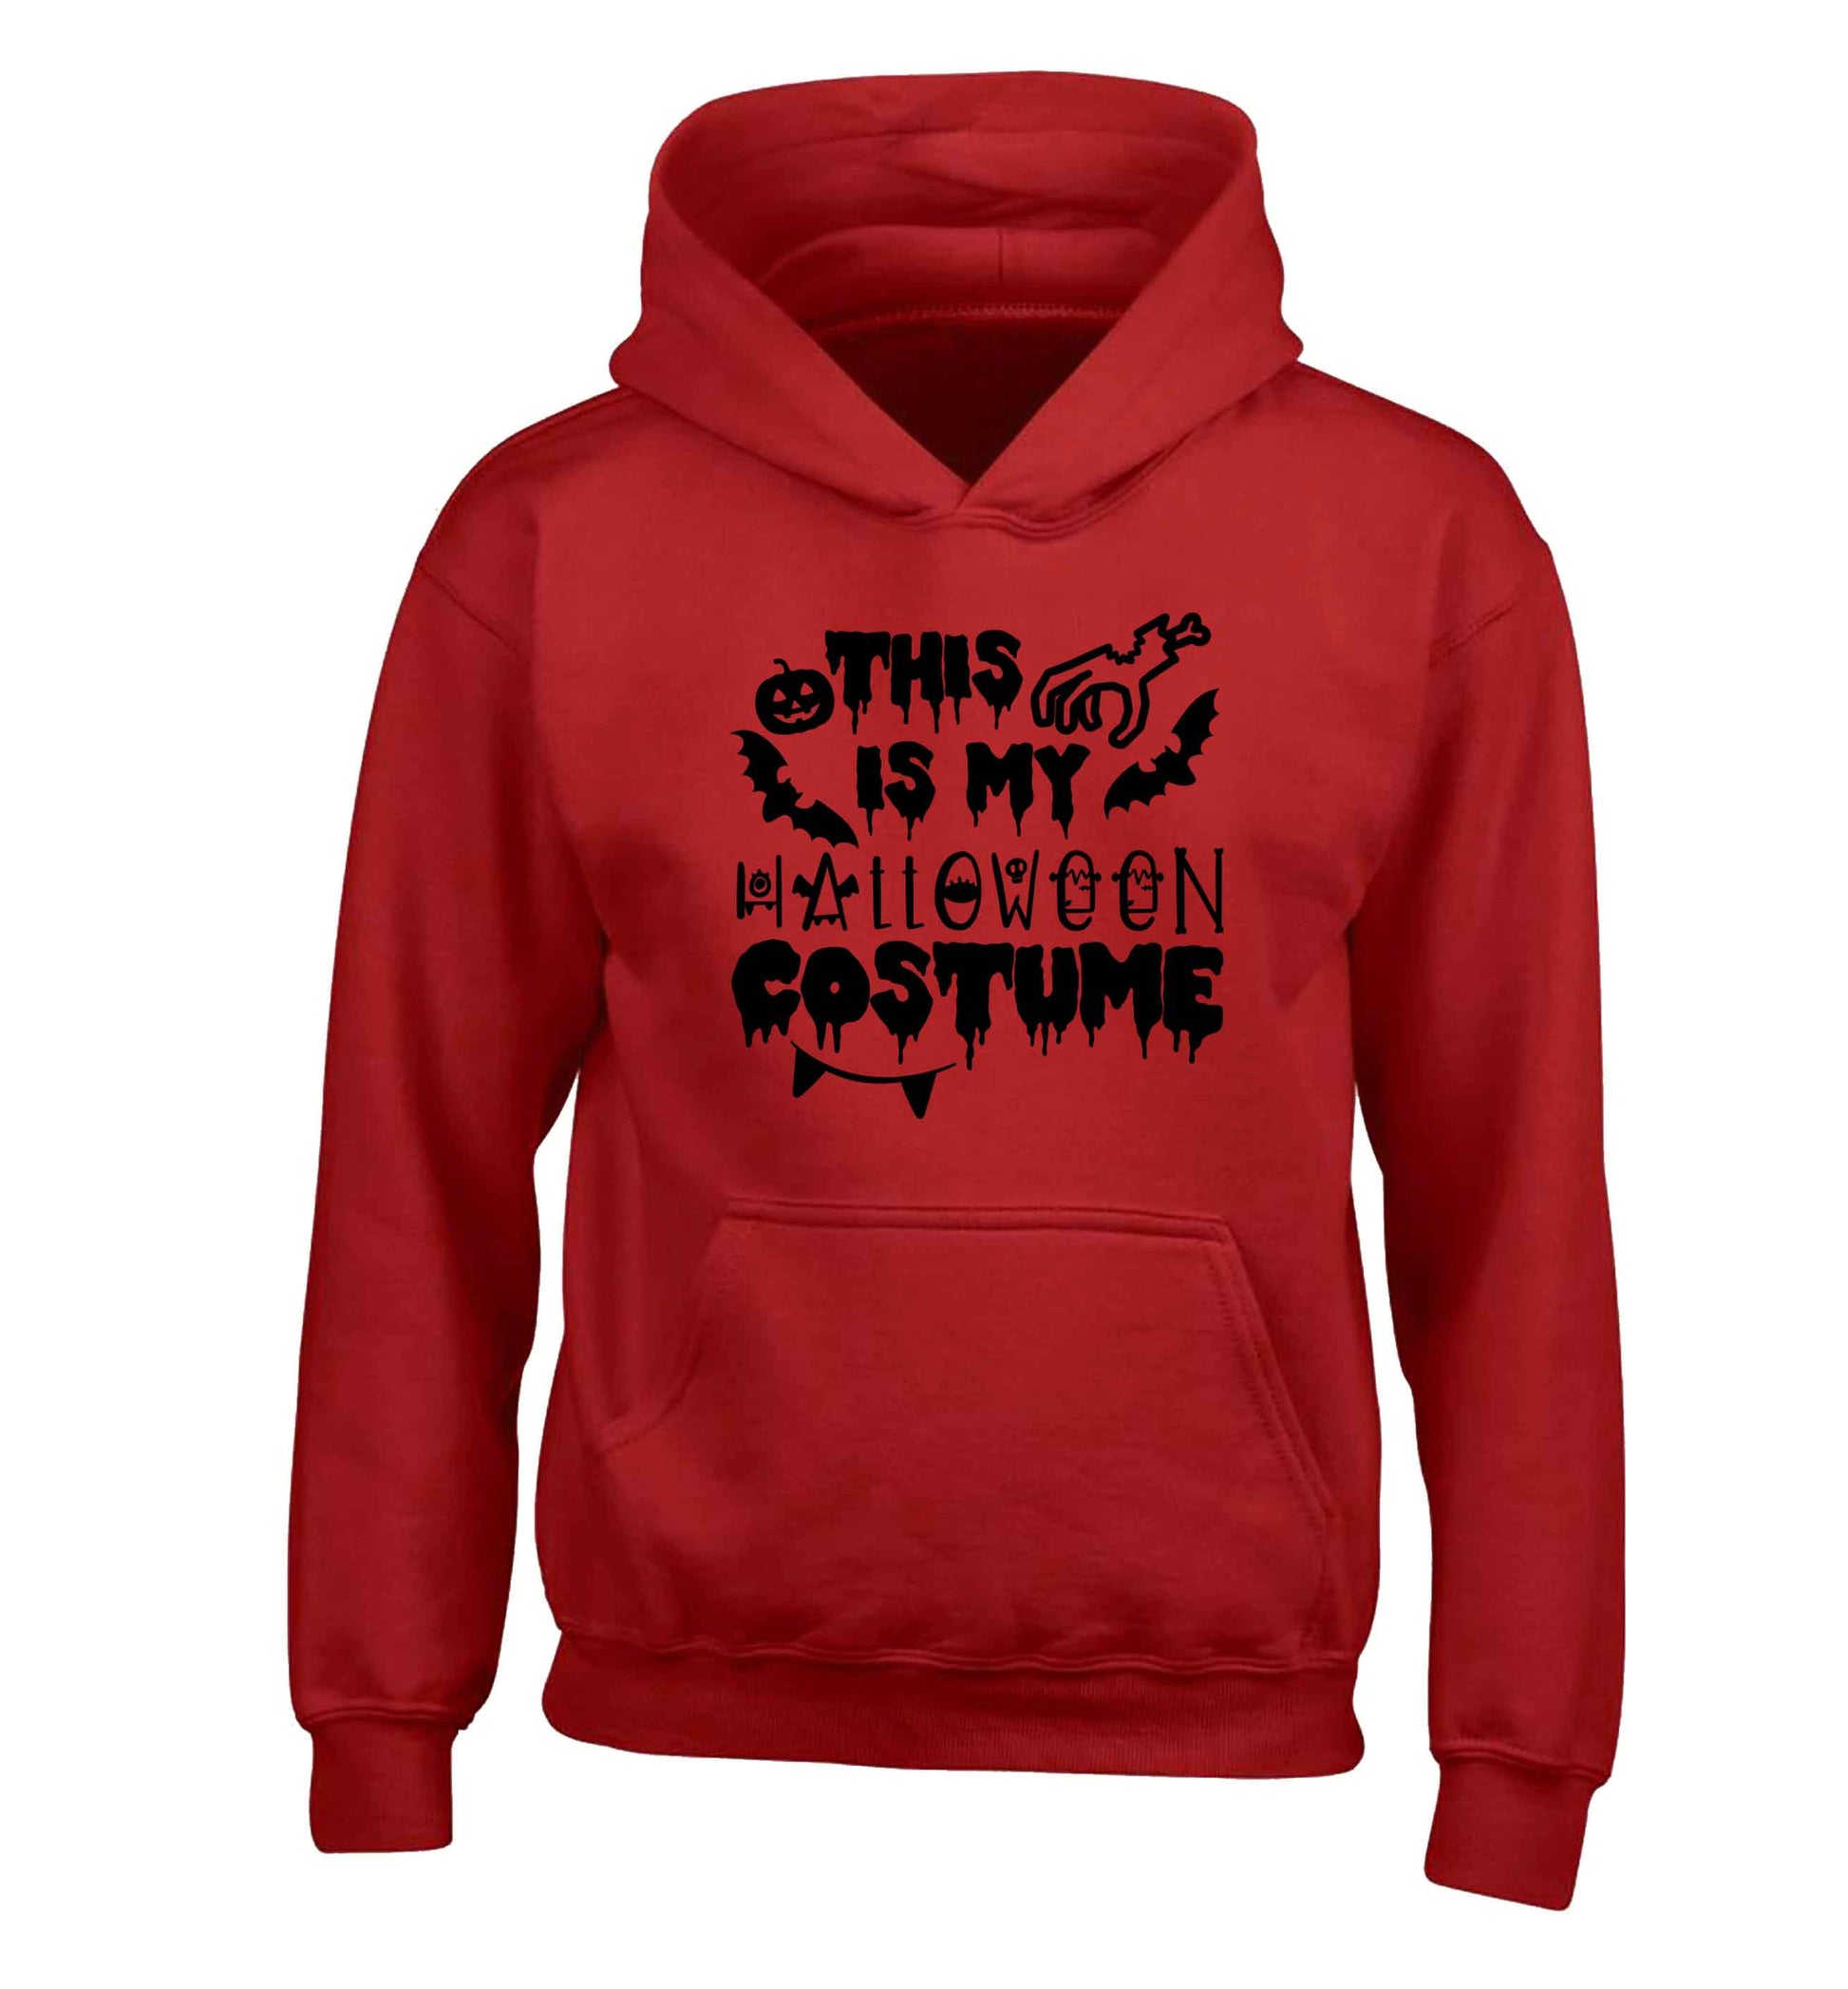 This is my halloween costume children's red hoodie 12-13 Years